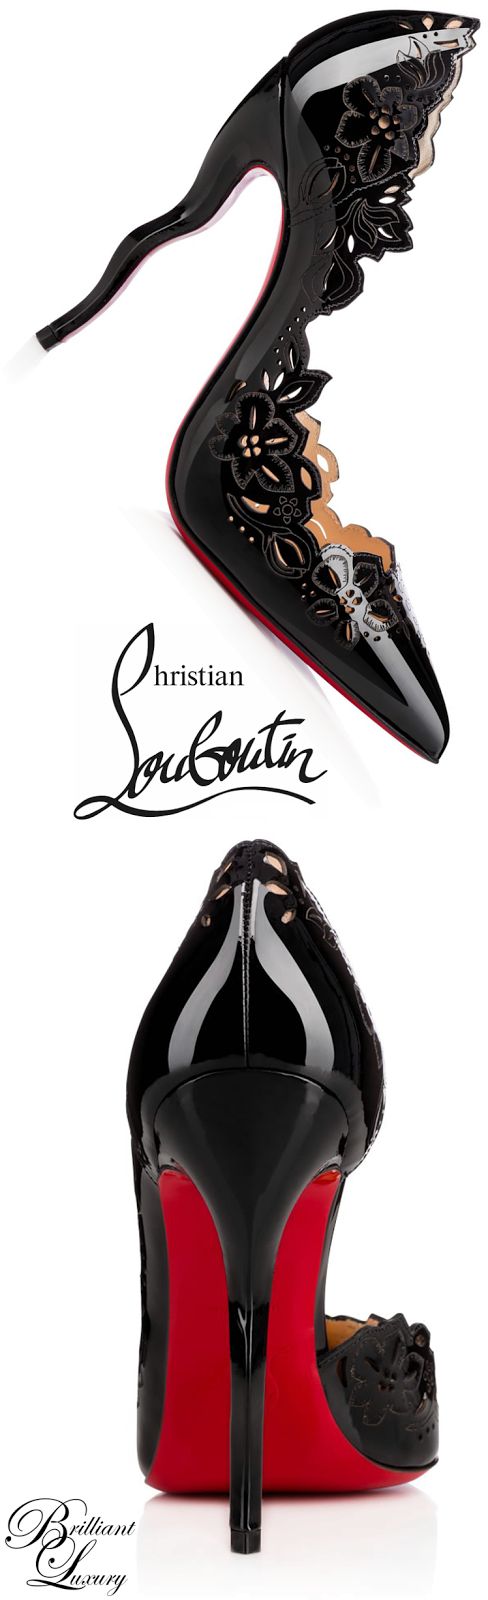 ♦Christian Louboutin 'Black Edition' 2015 - PerfectLifestyle.info ...